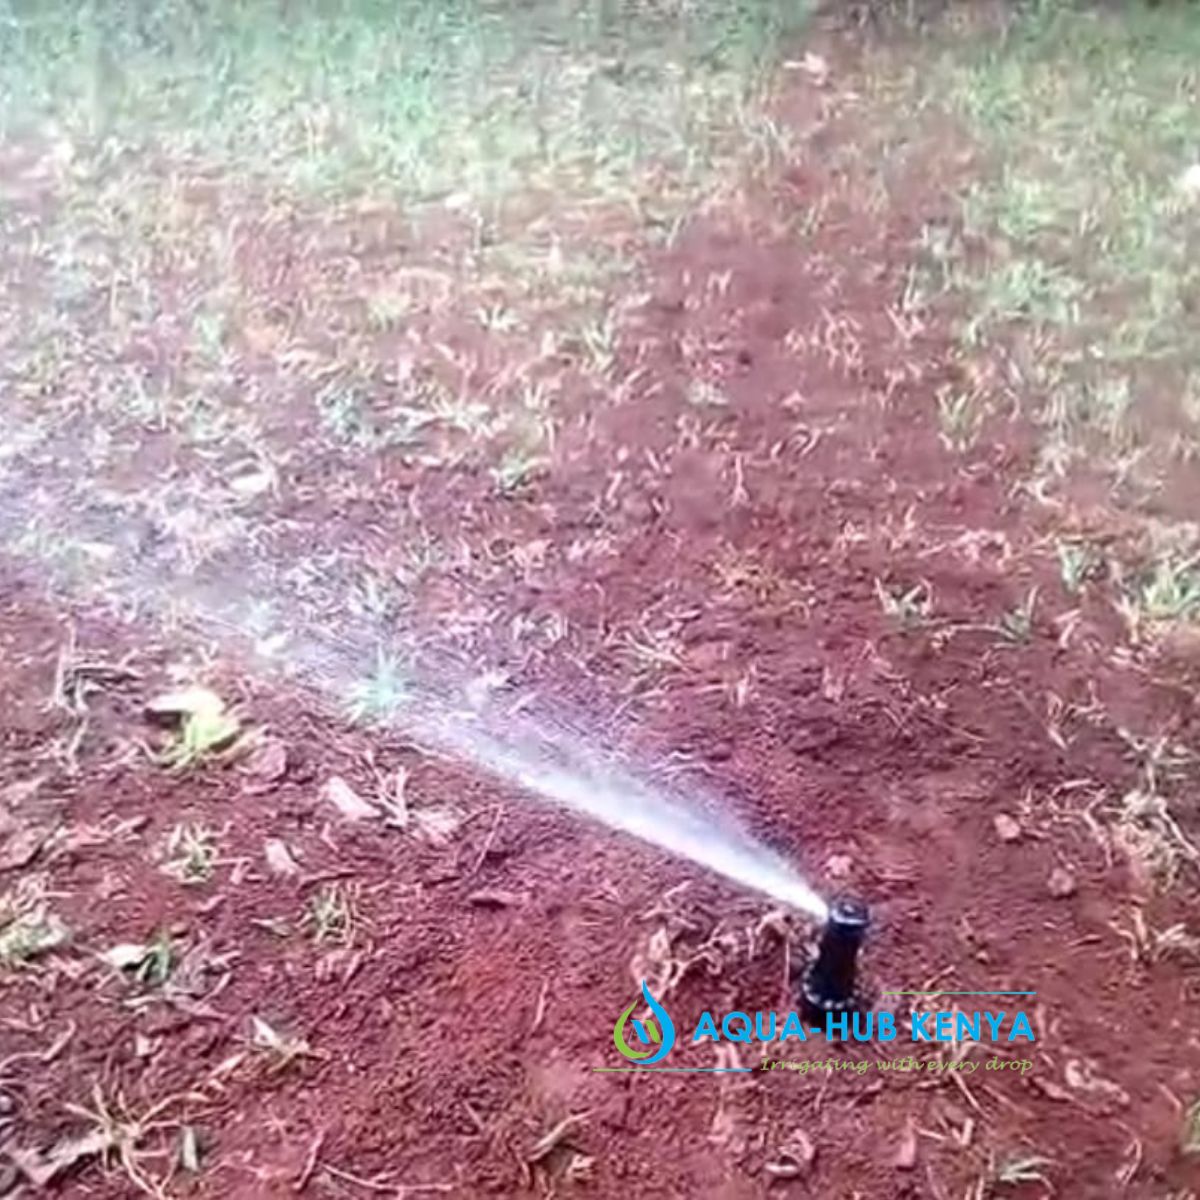 Rainbird Sprinkler Systems